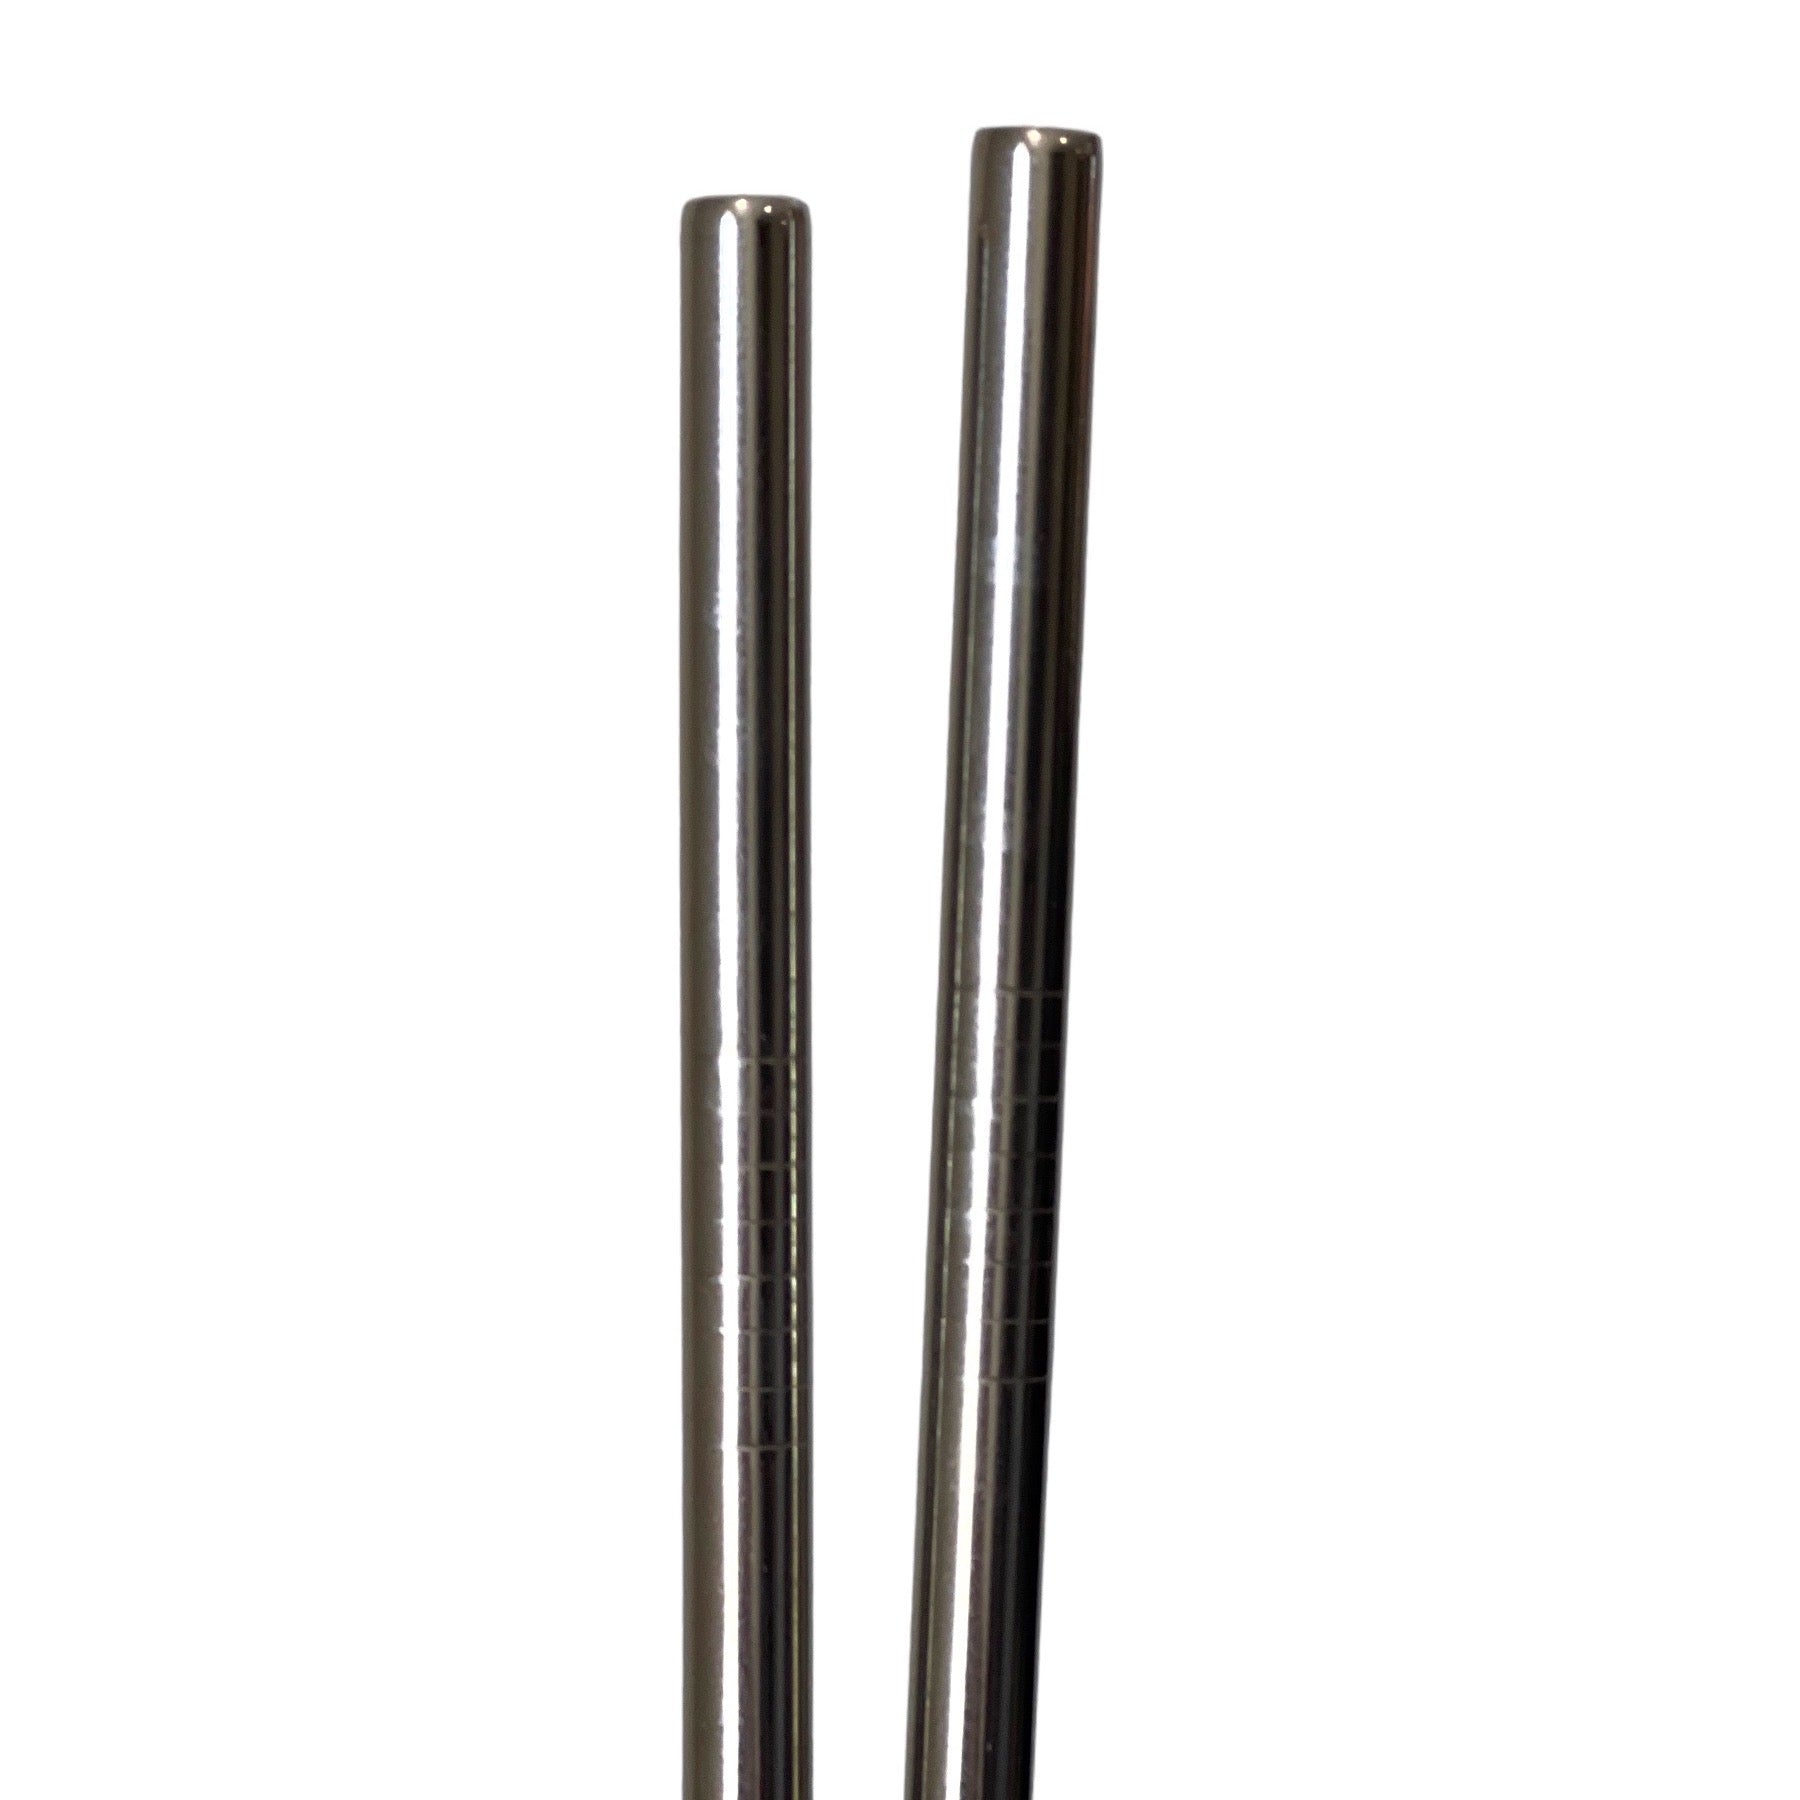 Free Stainless Steel Straws - 2 Pack - Biddlebee